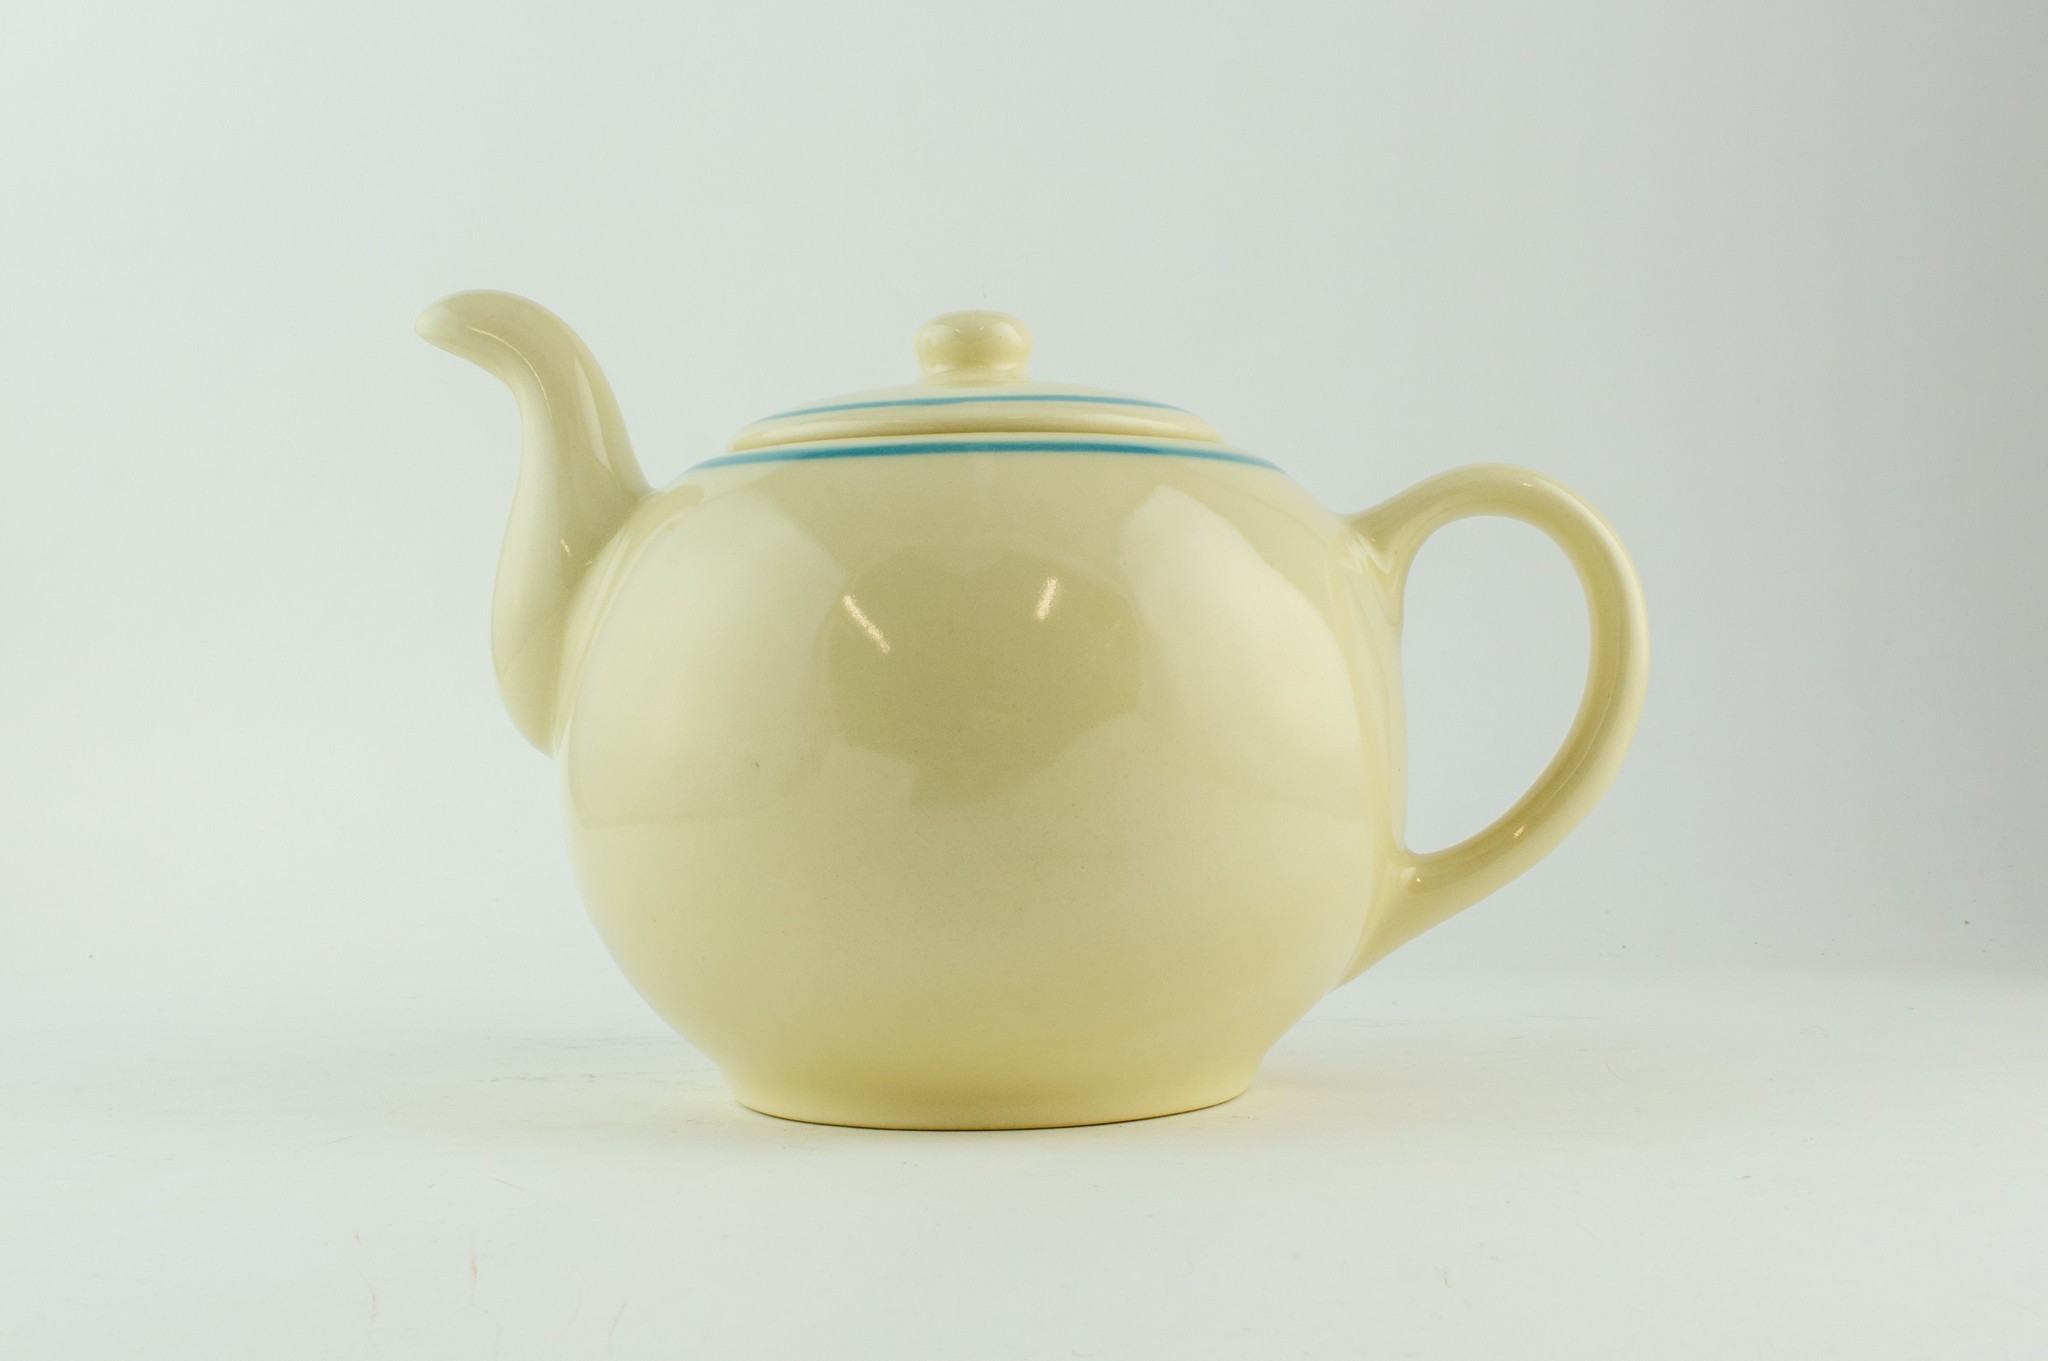 Medalta Reproduction Teapot